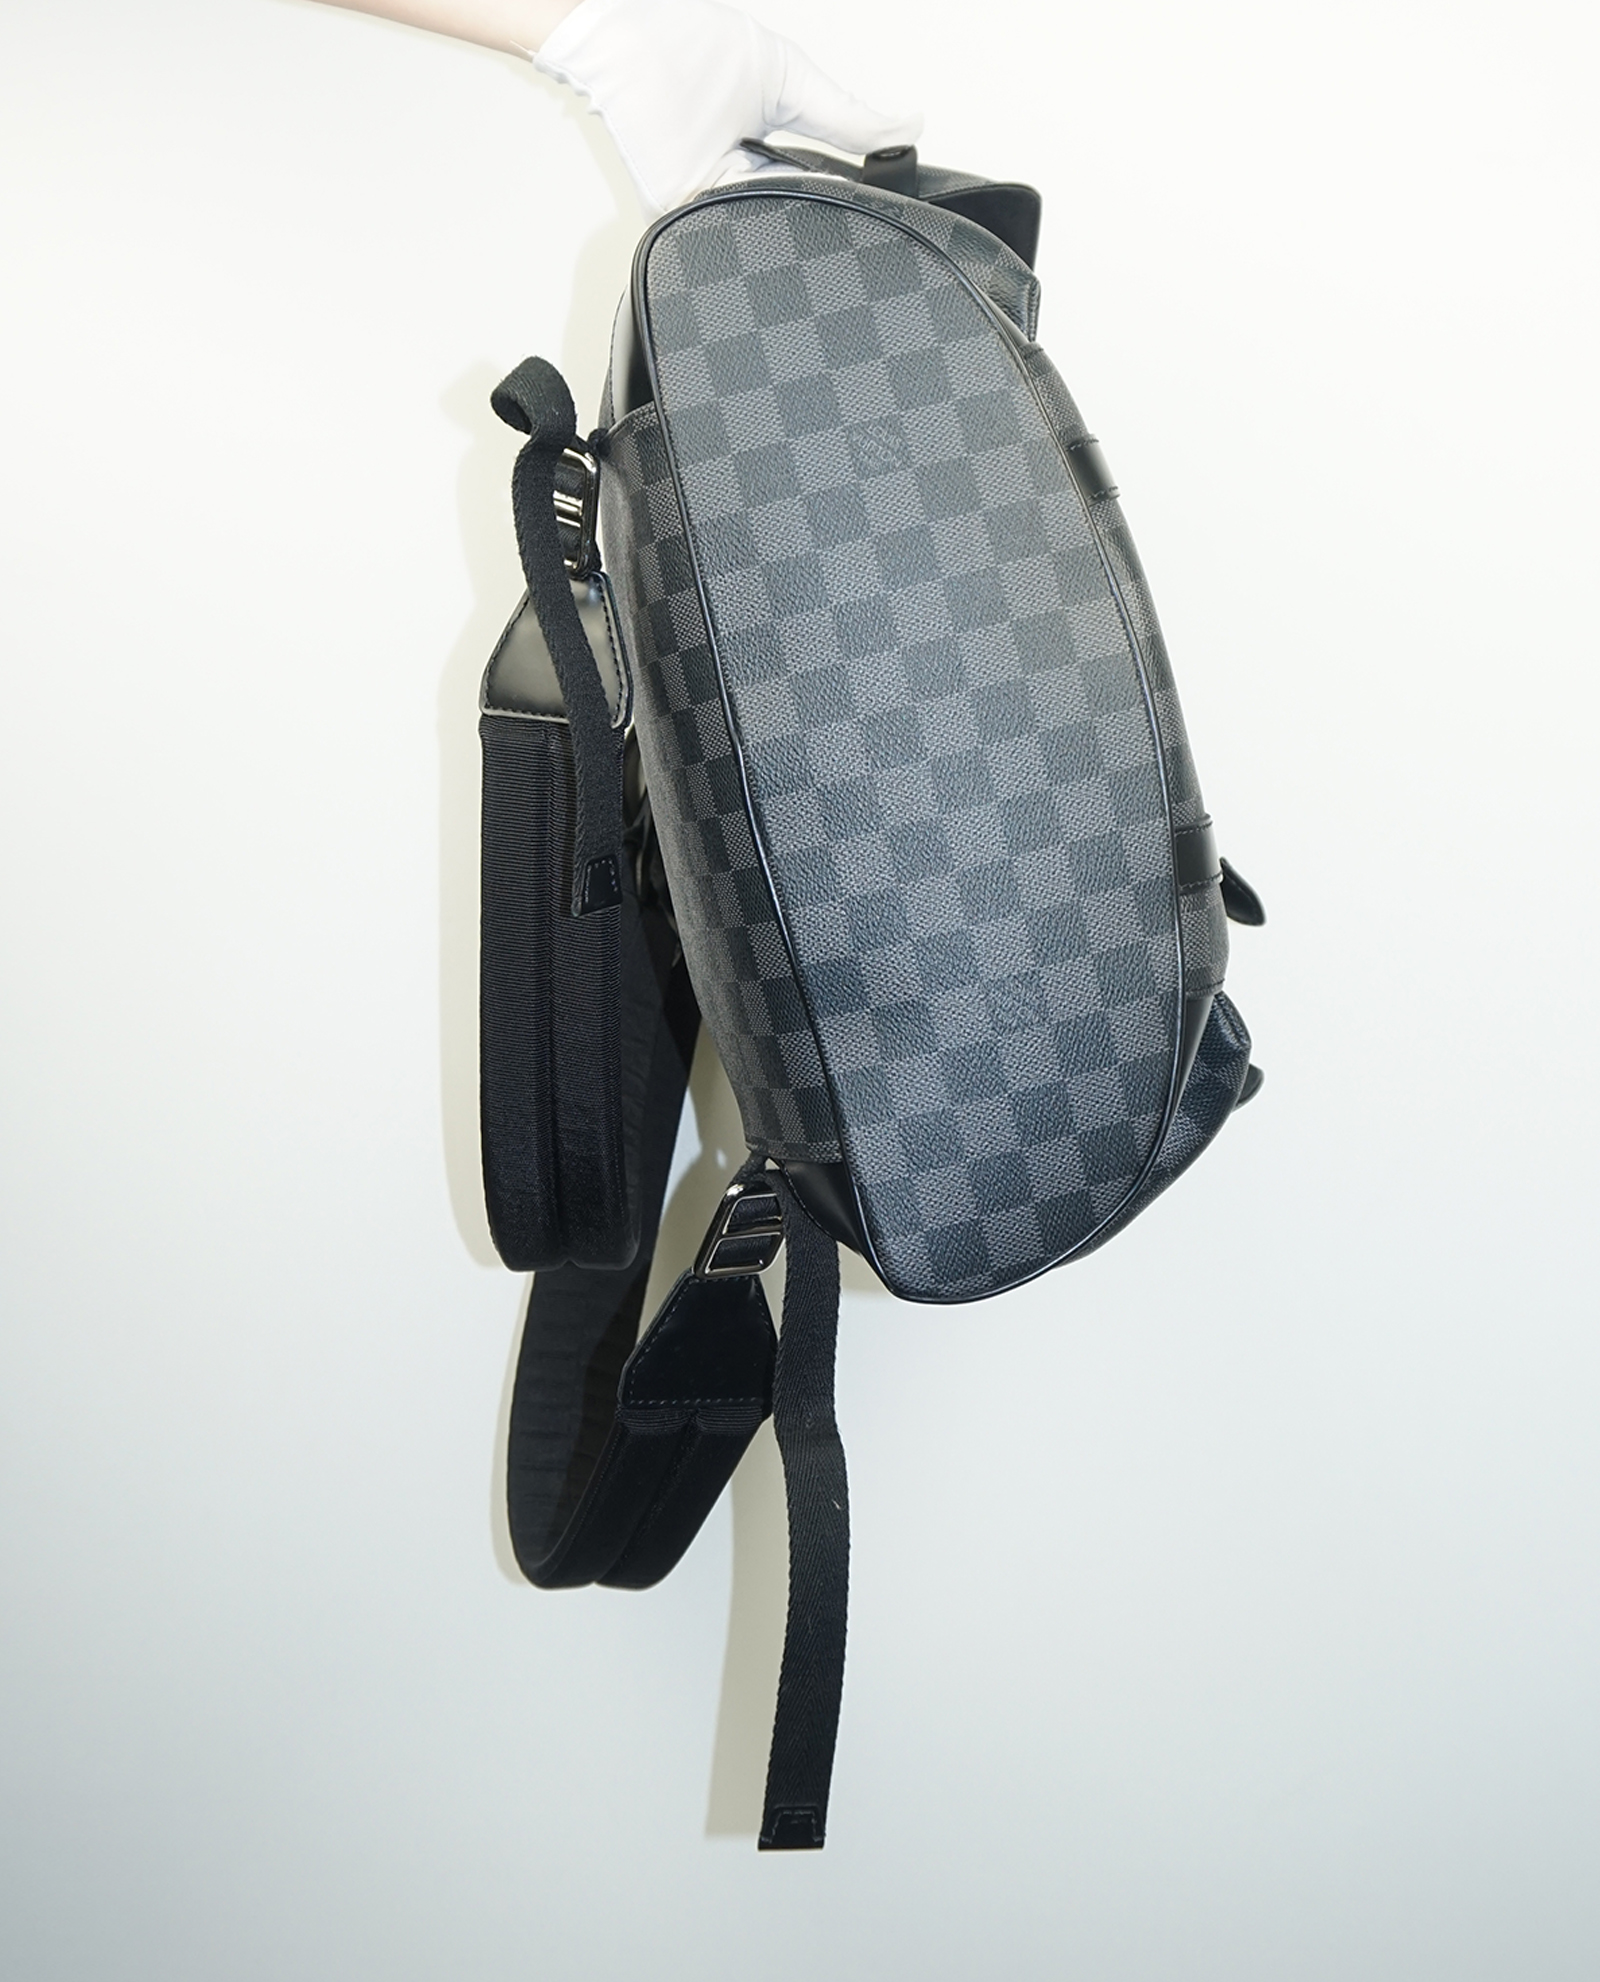 LV Christopher Backpack 海藍色-品質保證💎2023新品